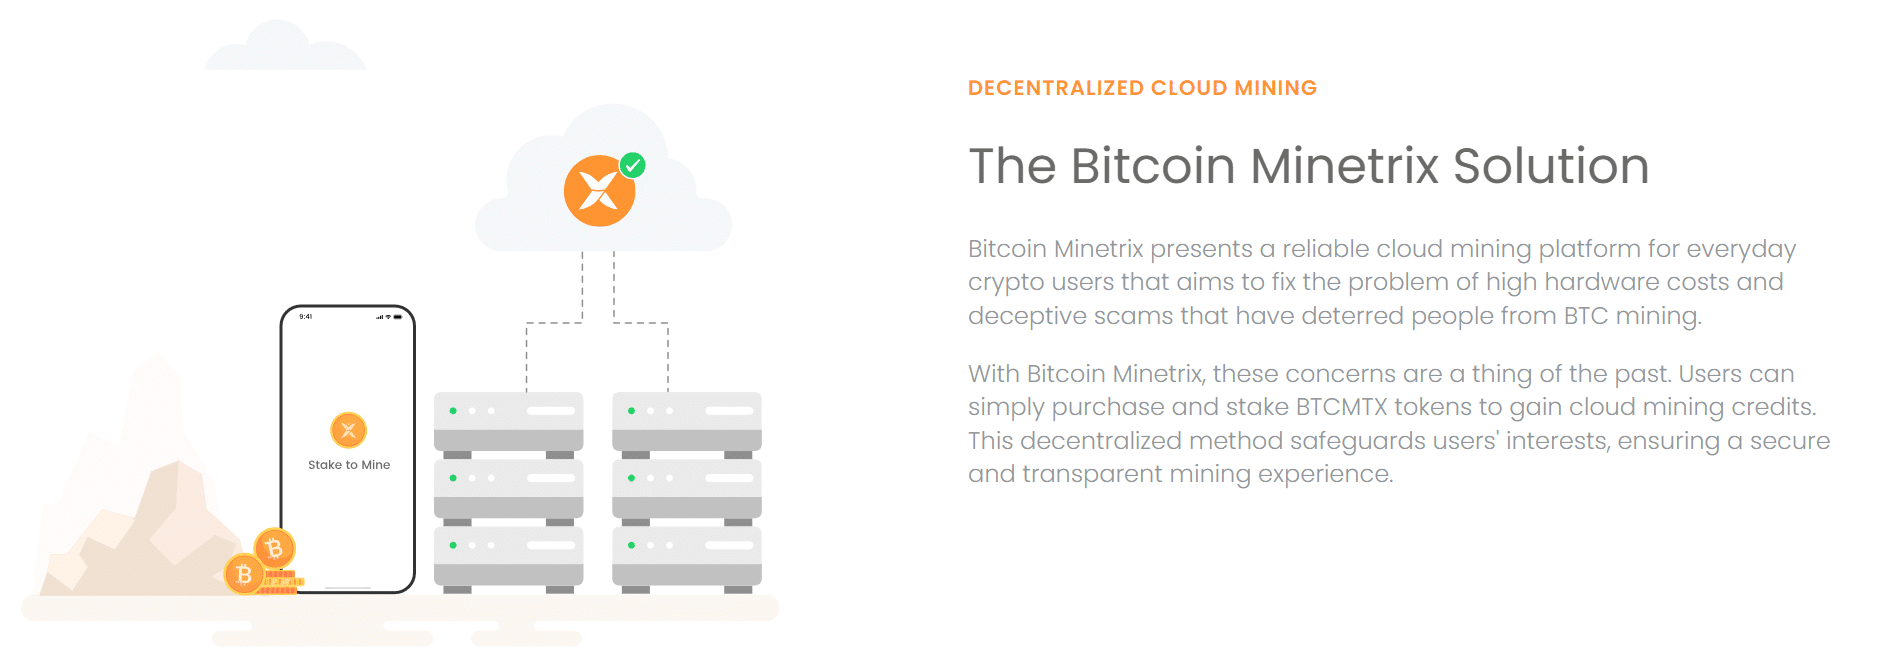 Bitcoin Minetrix. Stake-to-mine.